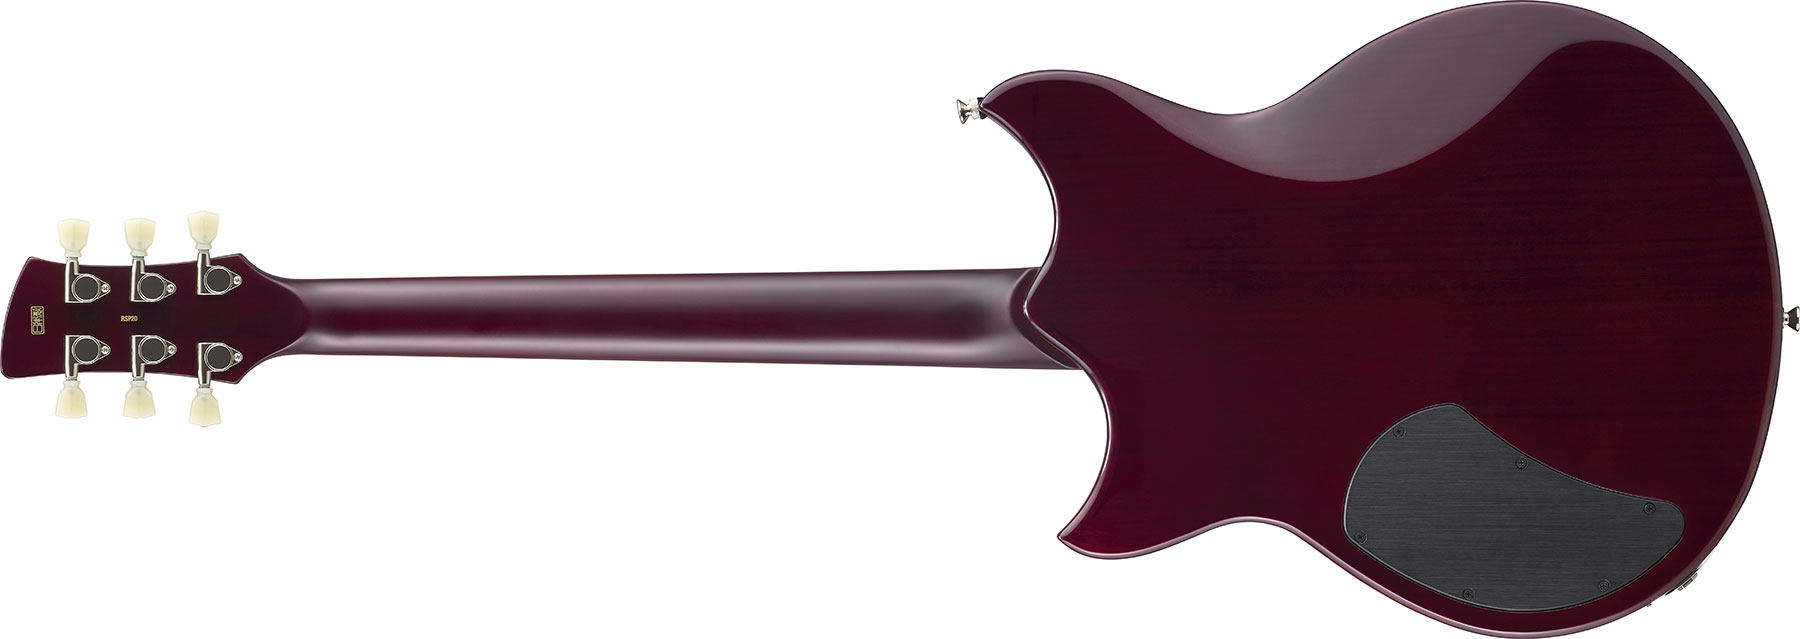 Yamaha Rss02t Revstar Standard 2p90 Ht Rw - Black - Double cut electric guitar - Variation 2